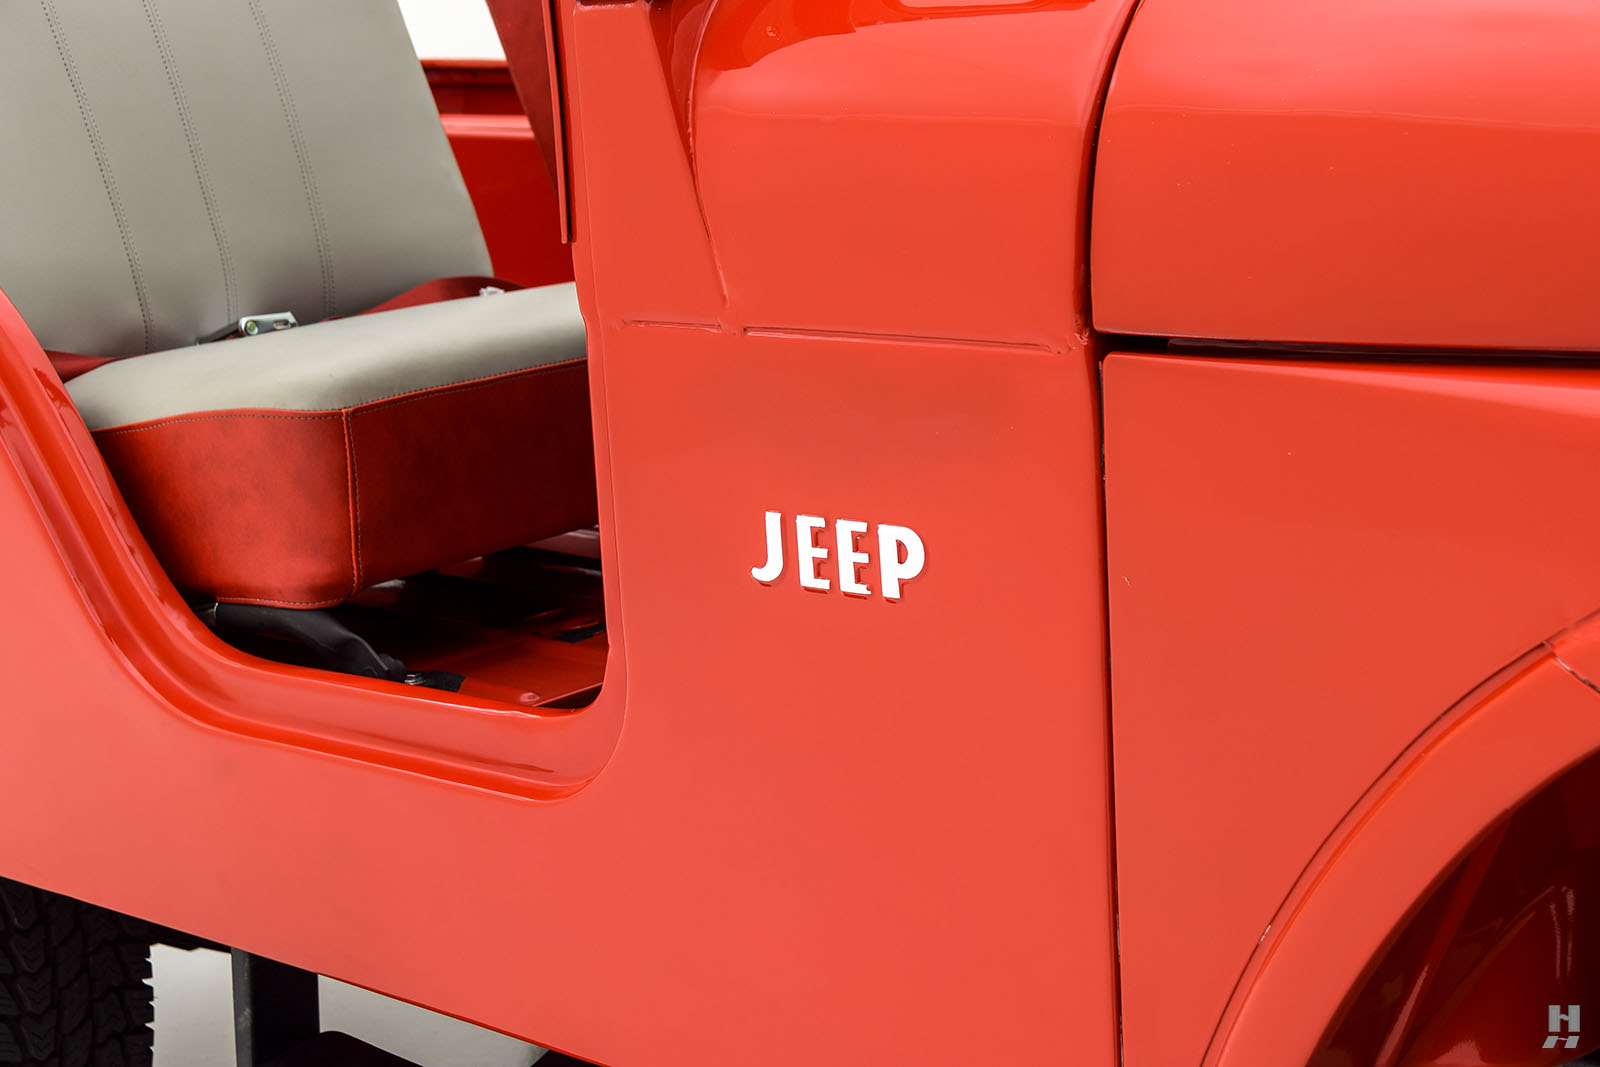 1965 jeep cj-5a tuxedo park